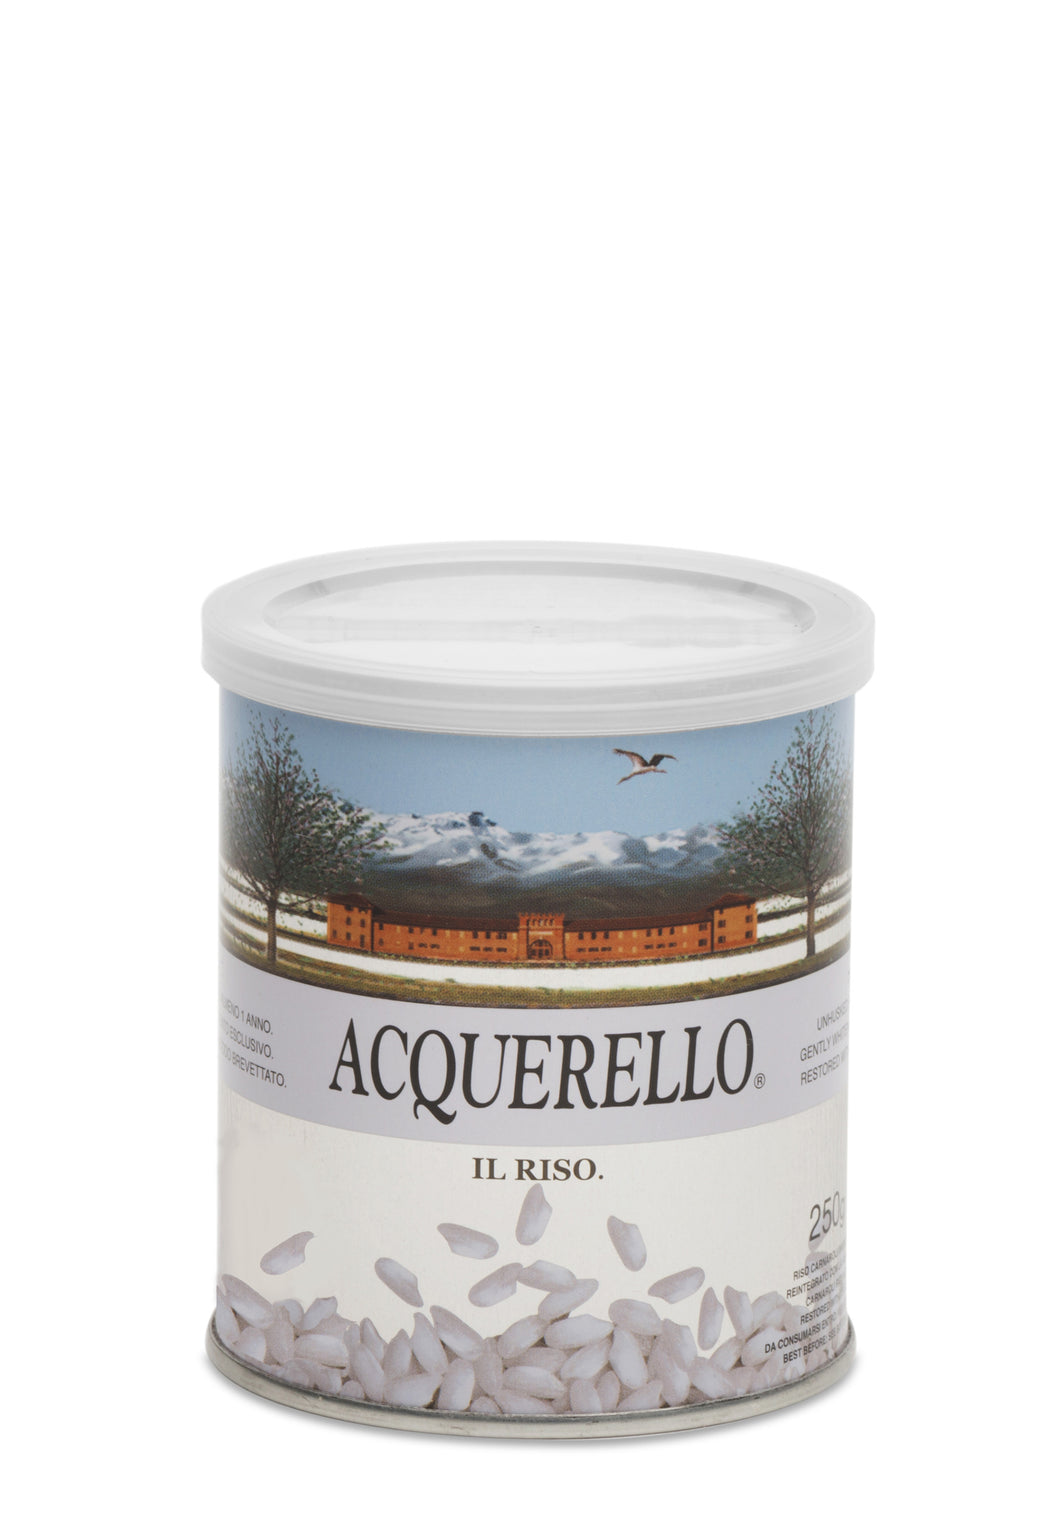 Acquerello Aged Rice (Carnaroli Type) 250 grams Tin